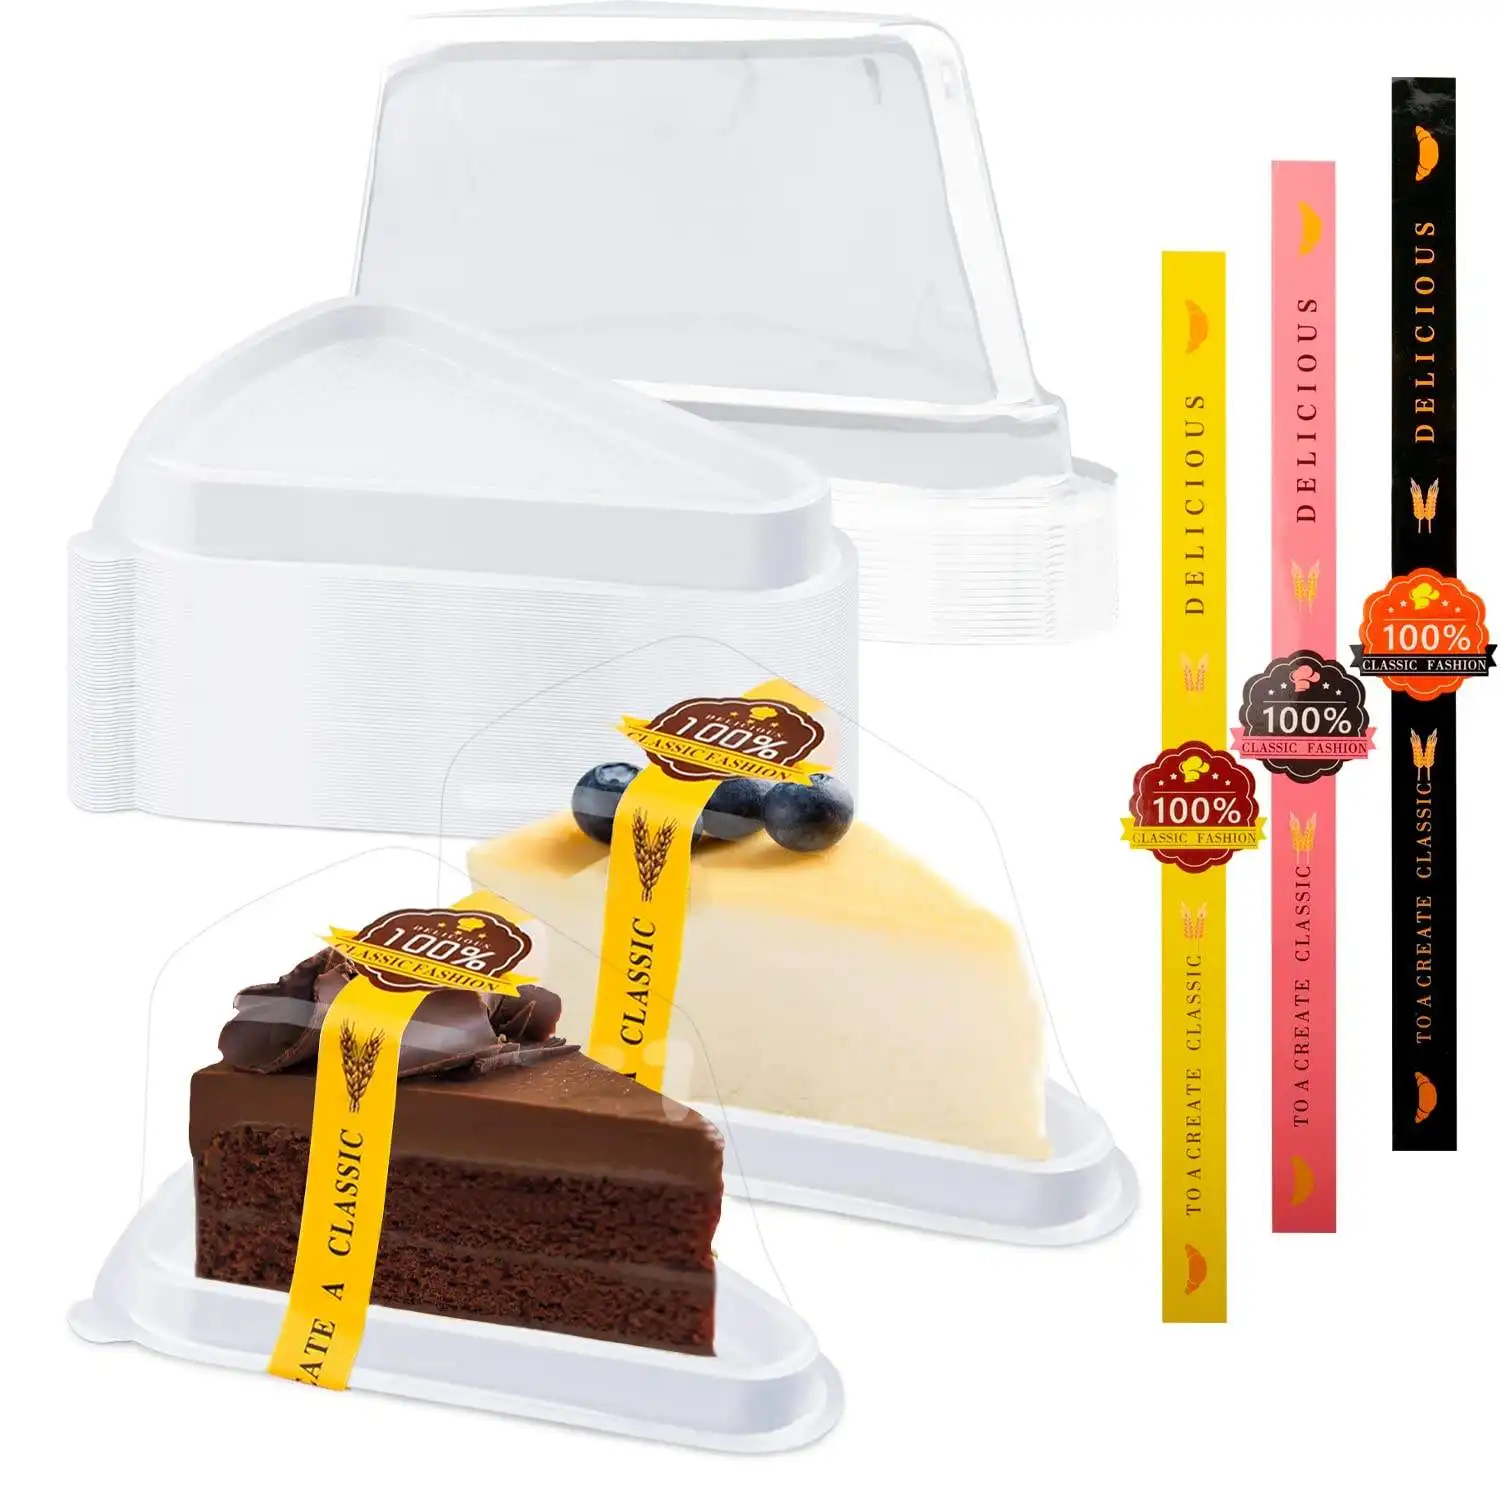 Kemasan makanan Mni kotak kue roti kotak kue segitiga plastik bening kotak kue